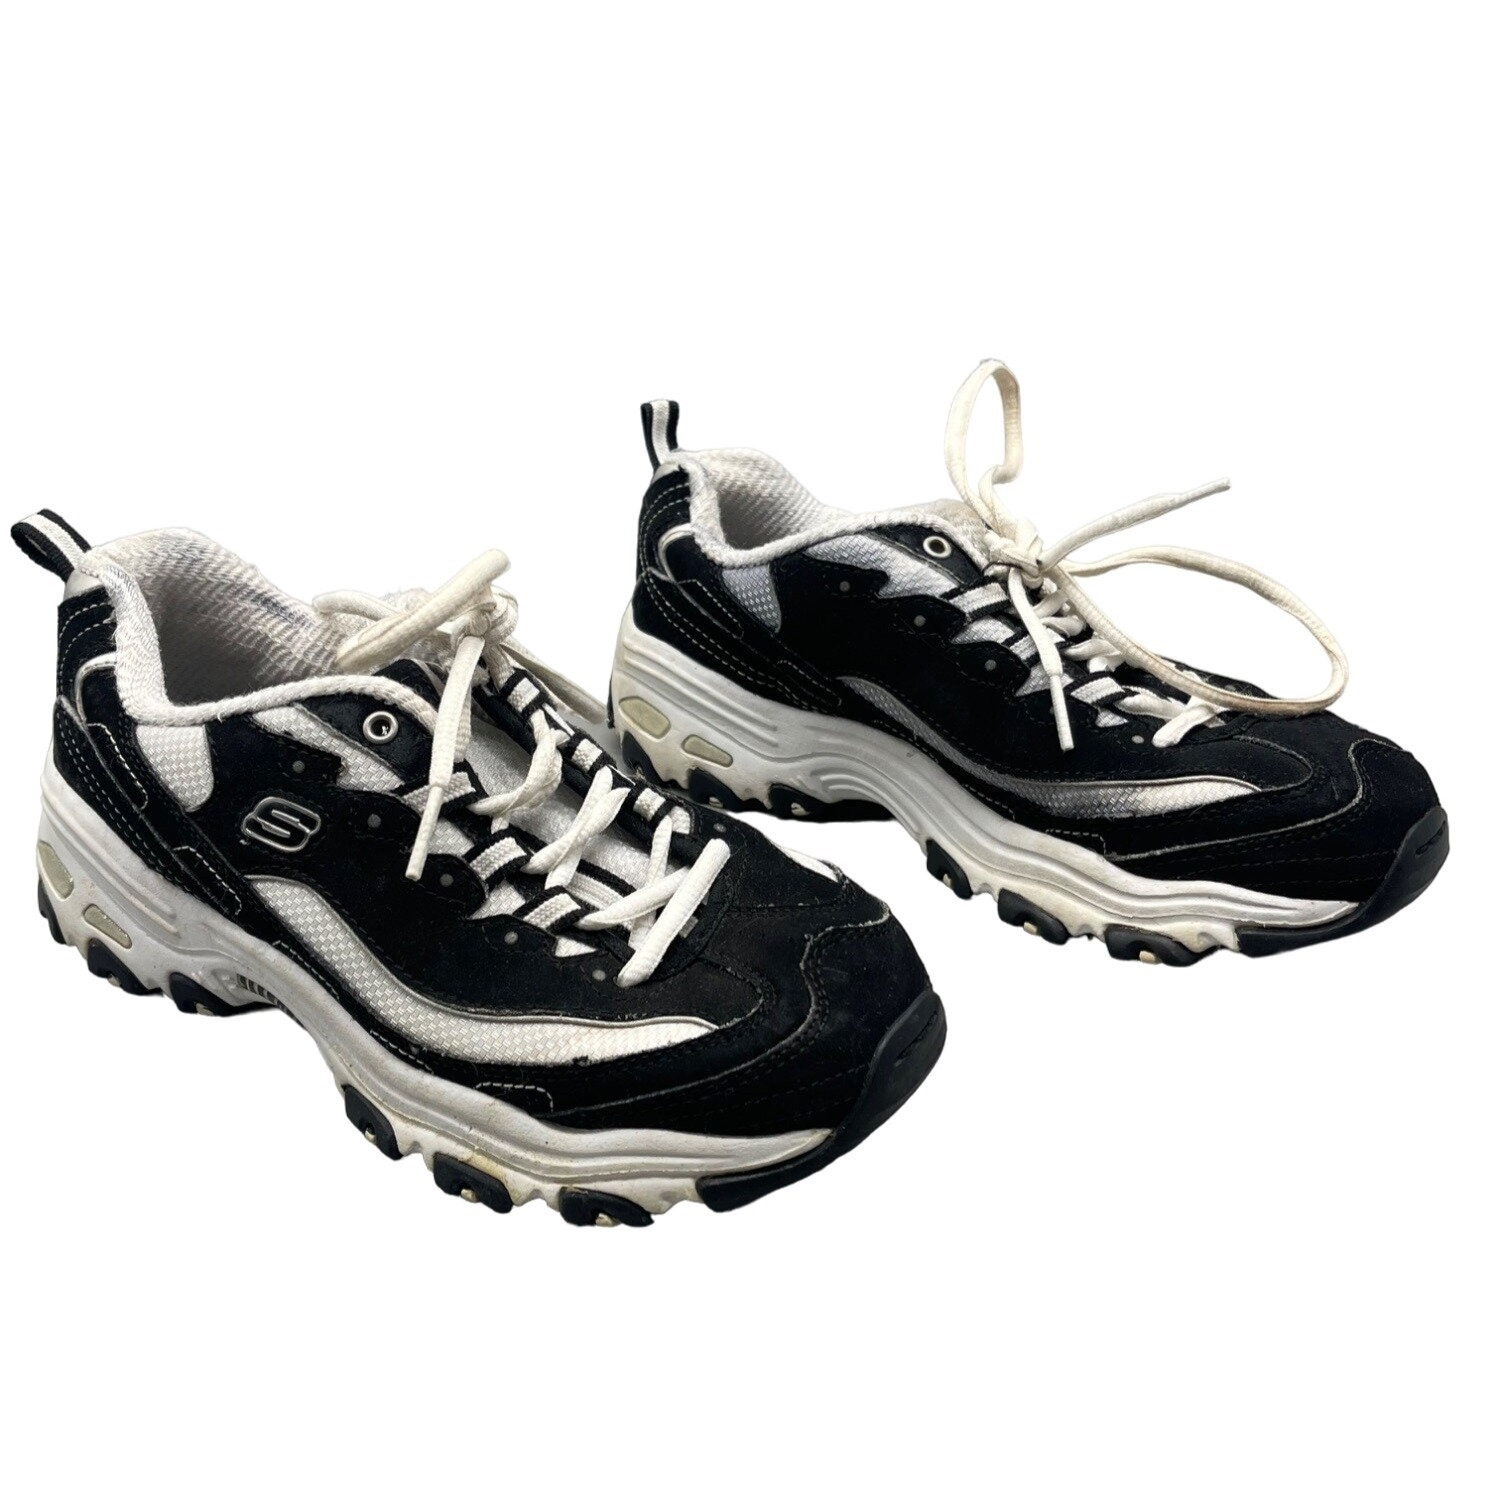 Dlites Skechers Sport Shoes Black White up Size Etsy